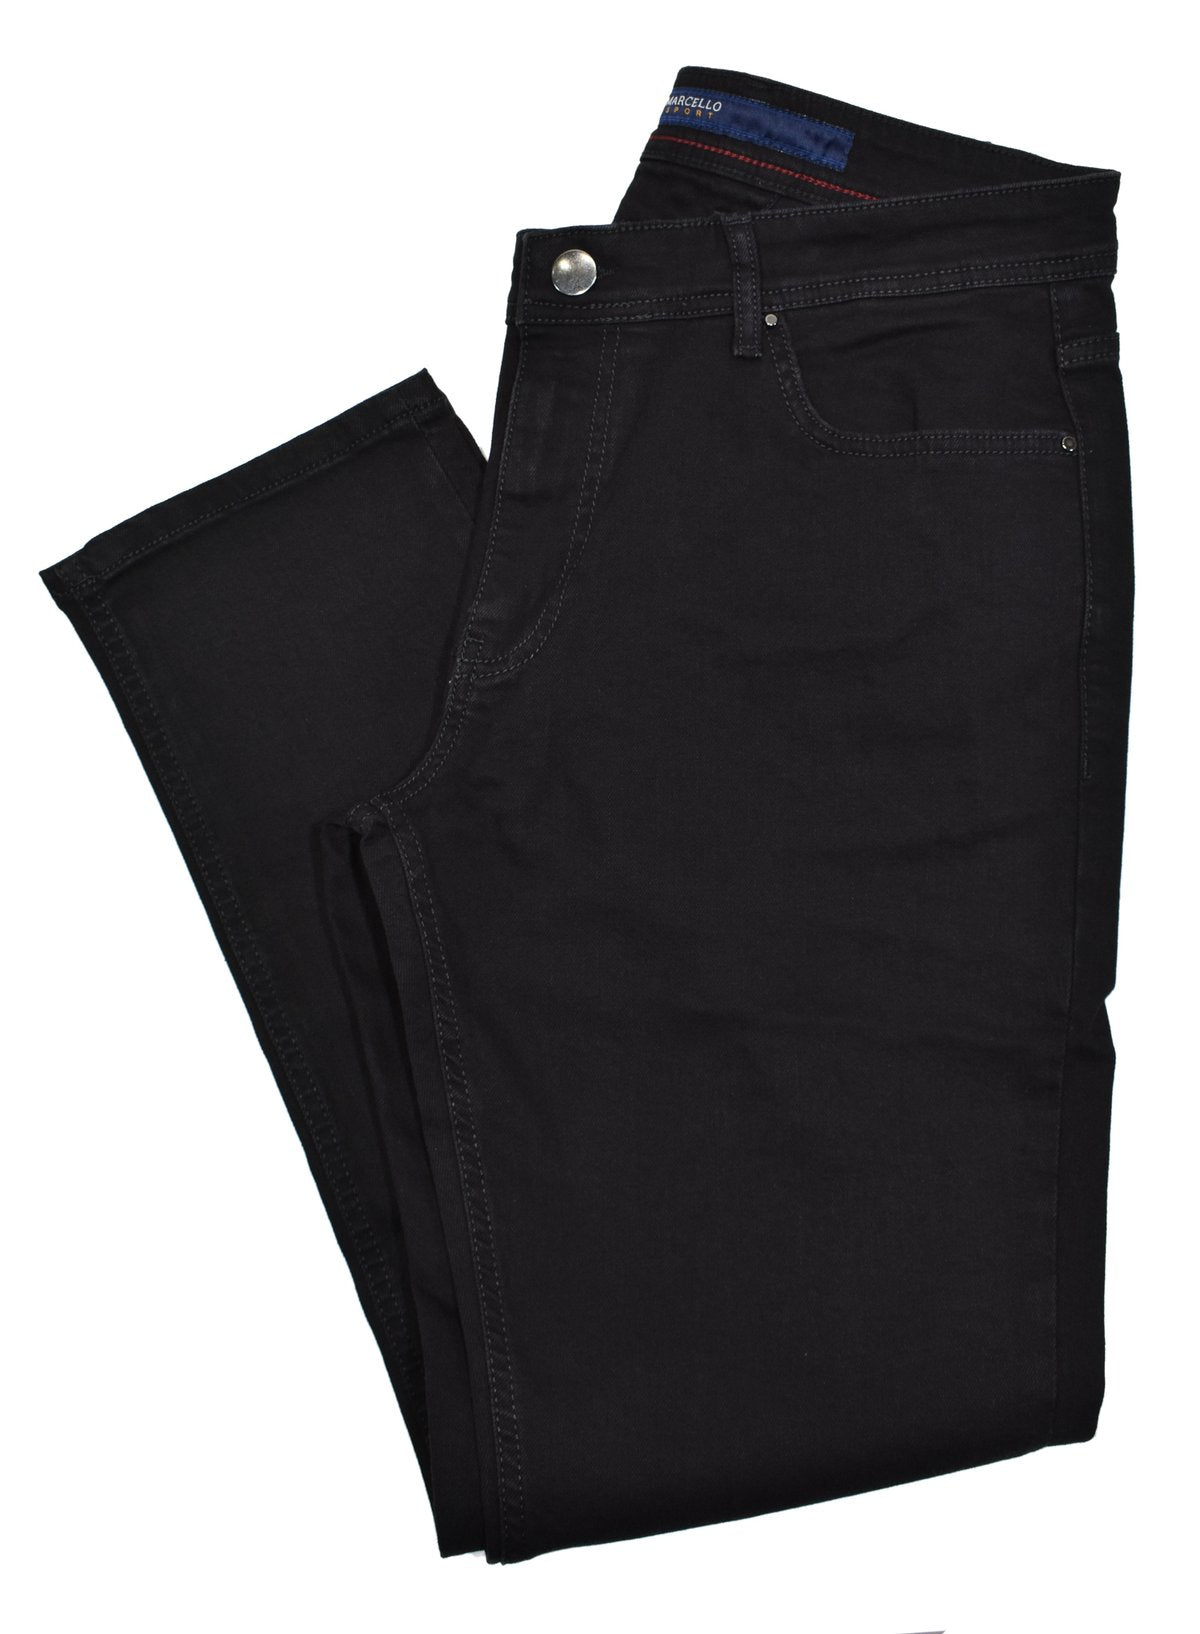 Men's Pen Slim Fit Jeans in Black by Kato - Thursday Boot Company